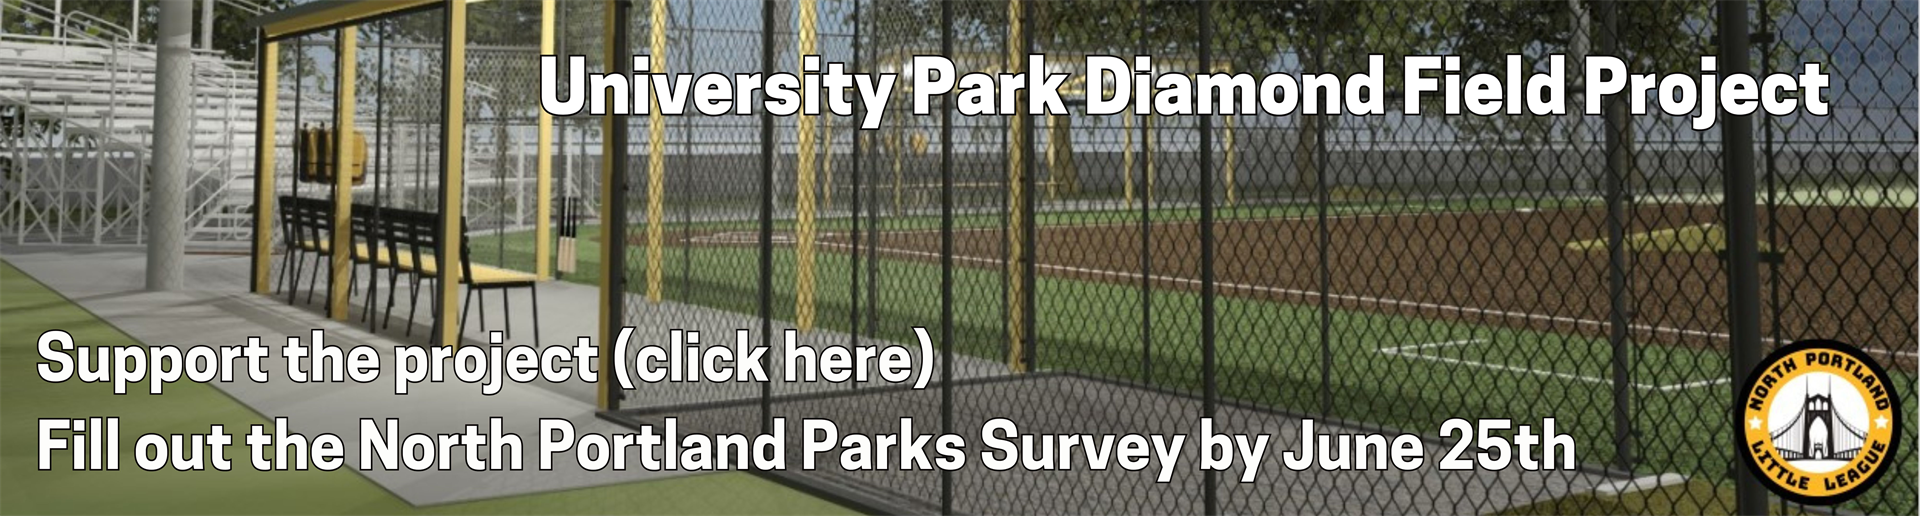 University Park Diamond Field Project